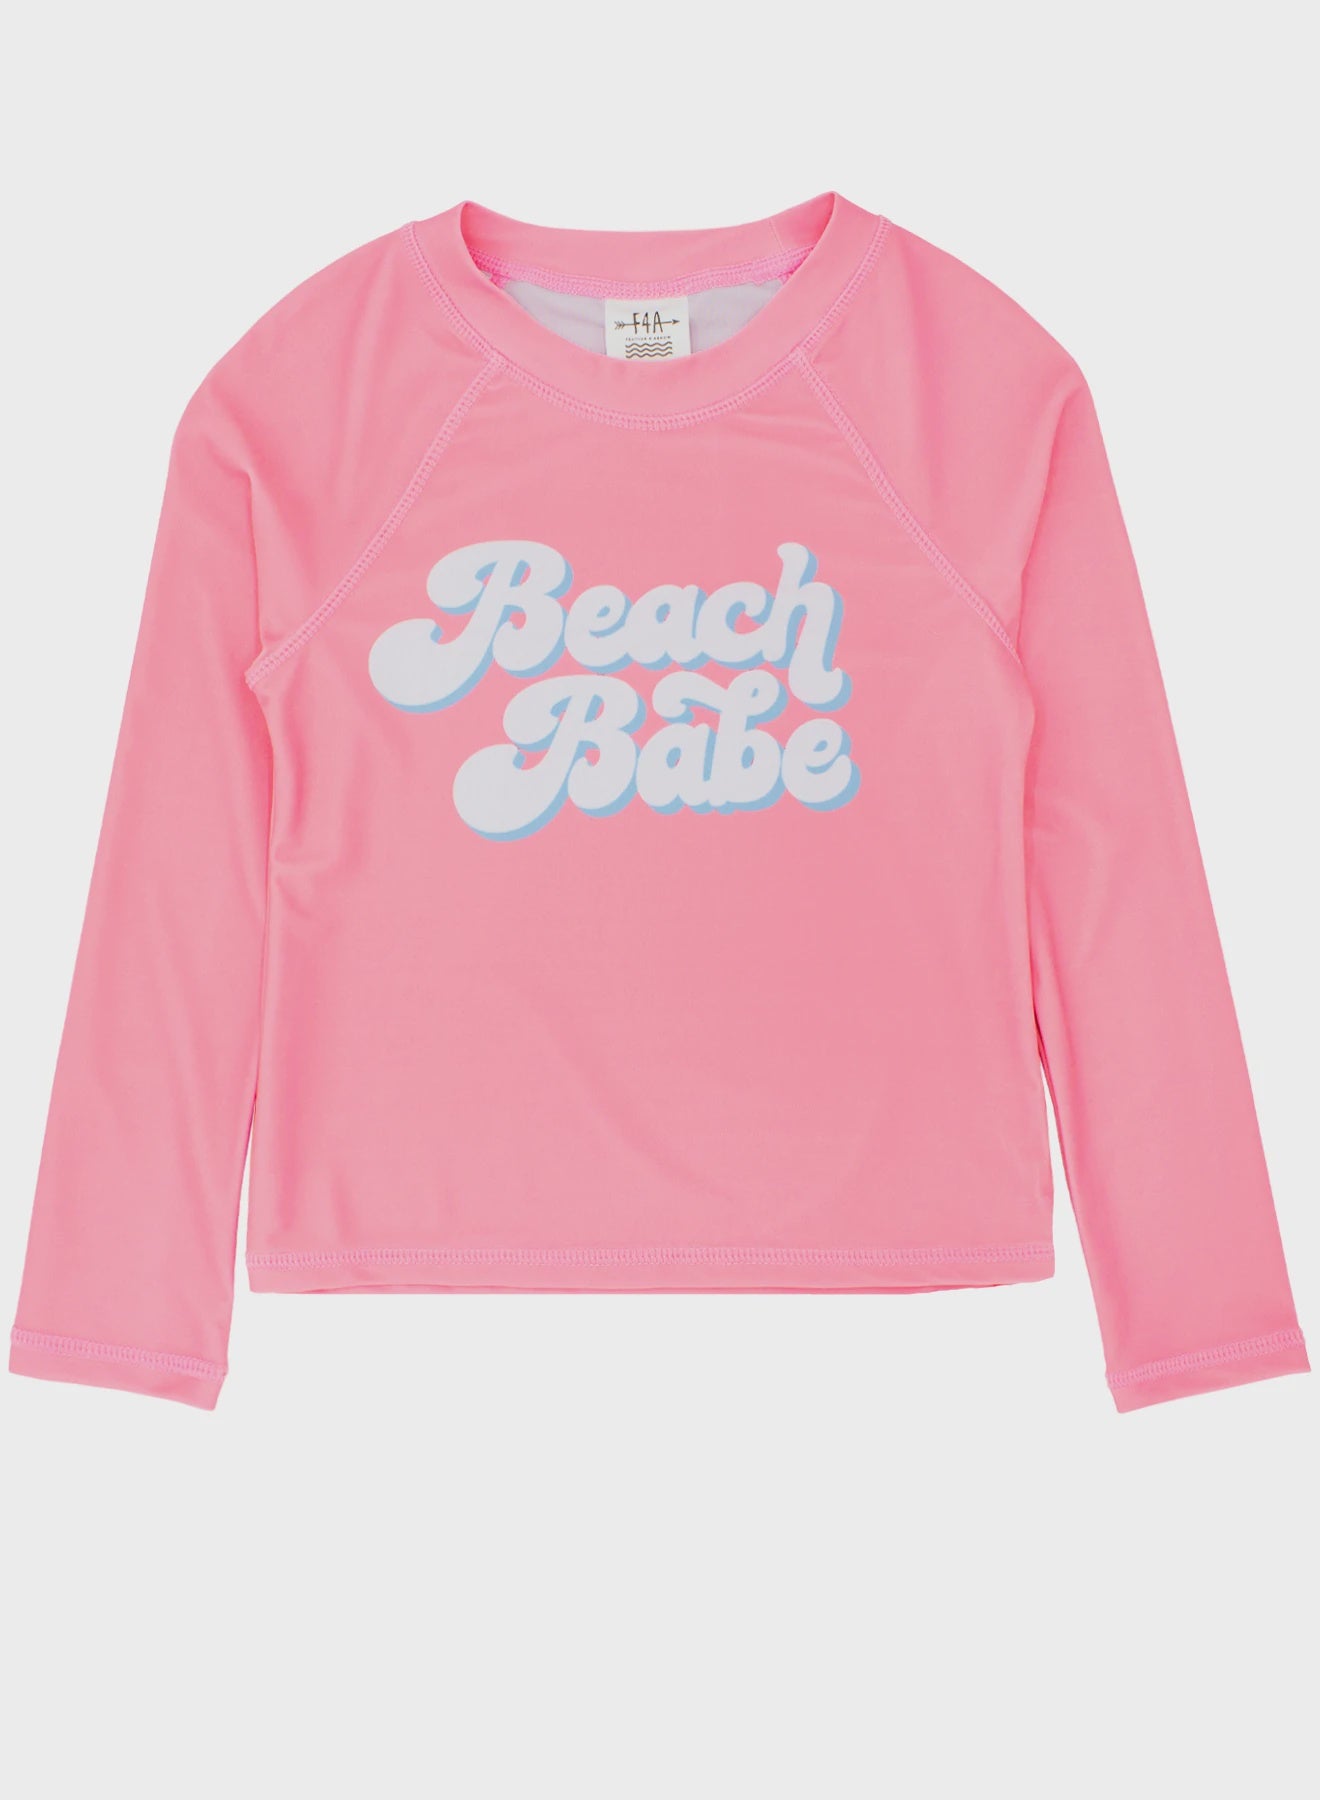 Feather 4 Arrow - Beach Babe Rash Top - Flamingo Pink